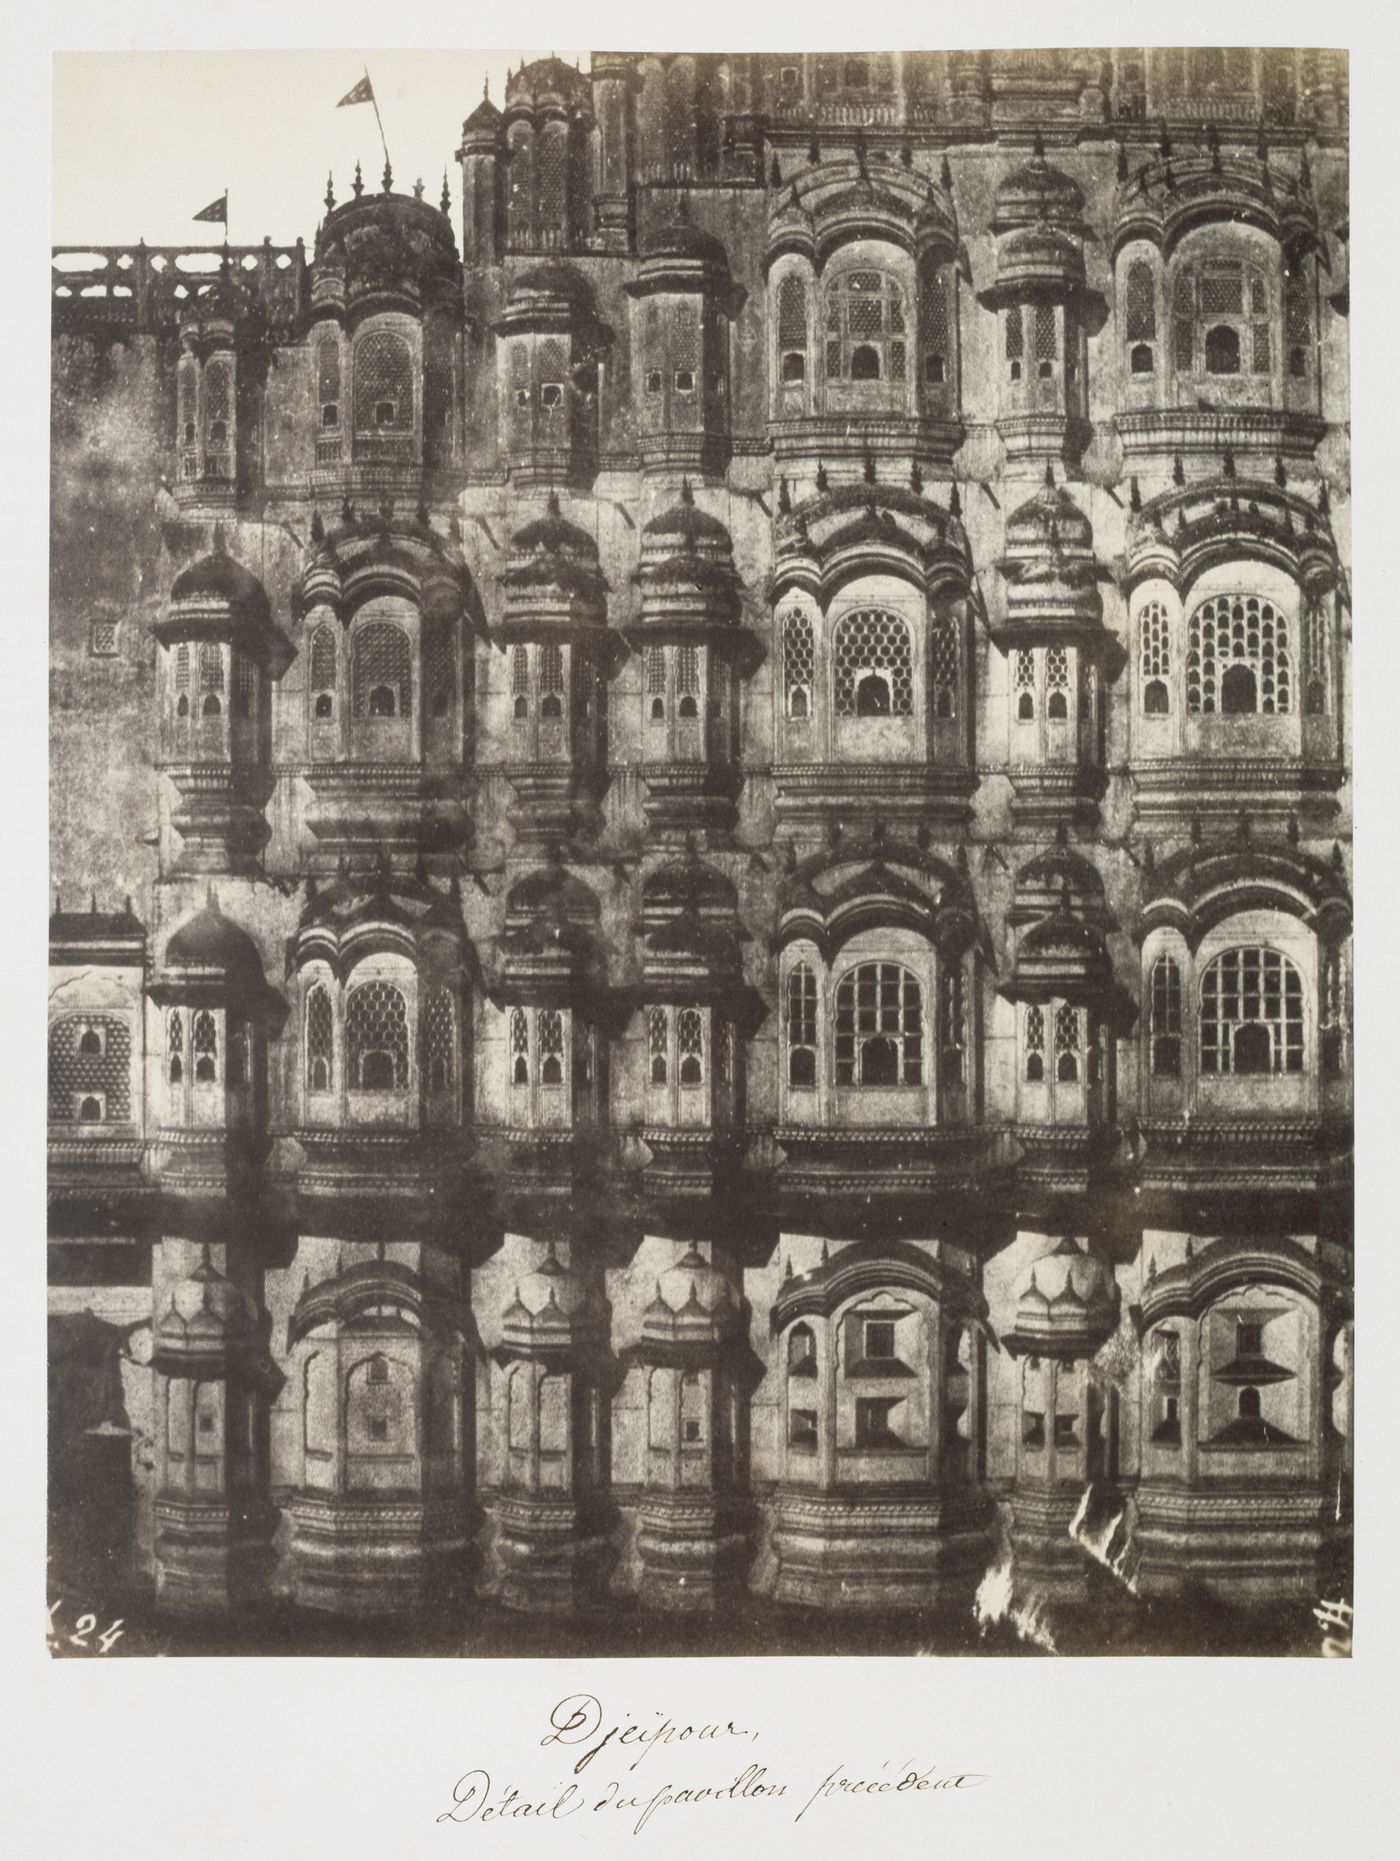 Detail view of the Hawa Mahal [Wind Palace], Jeypore (now Jaipur), India